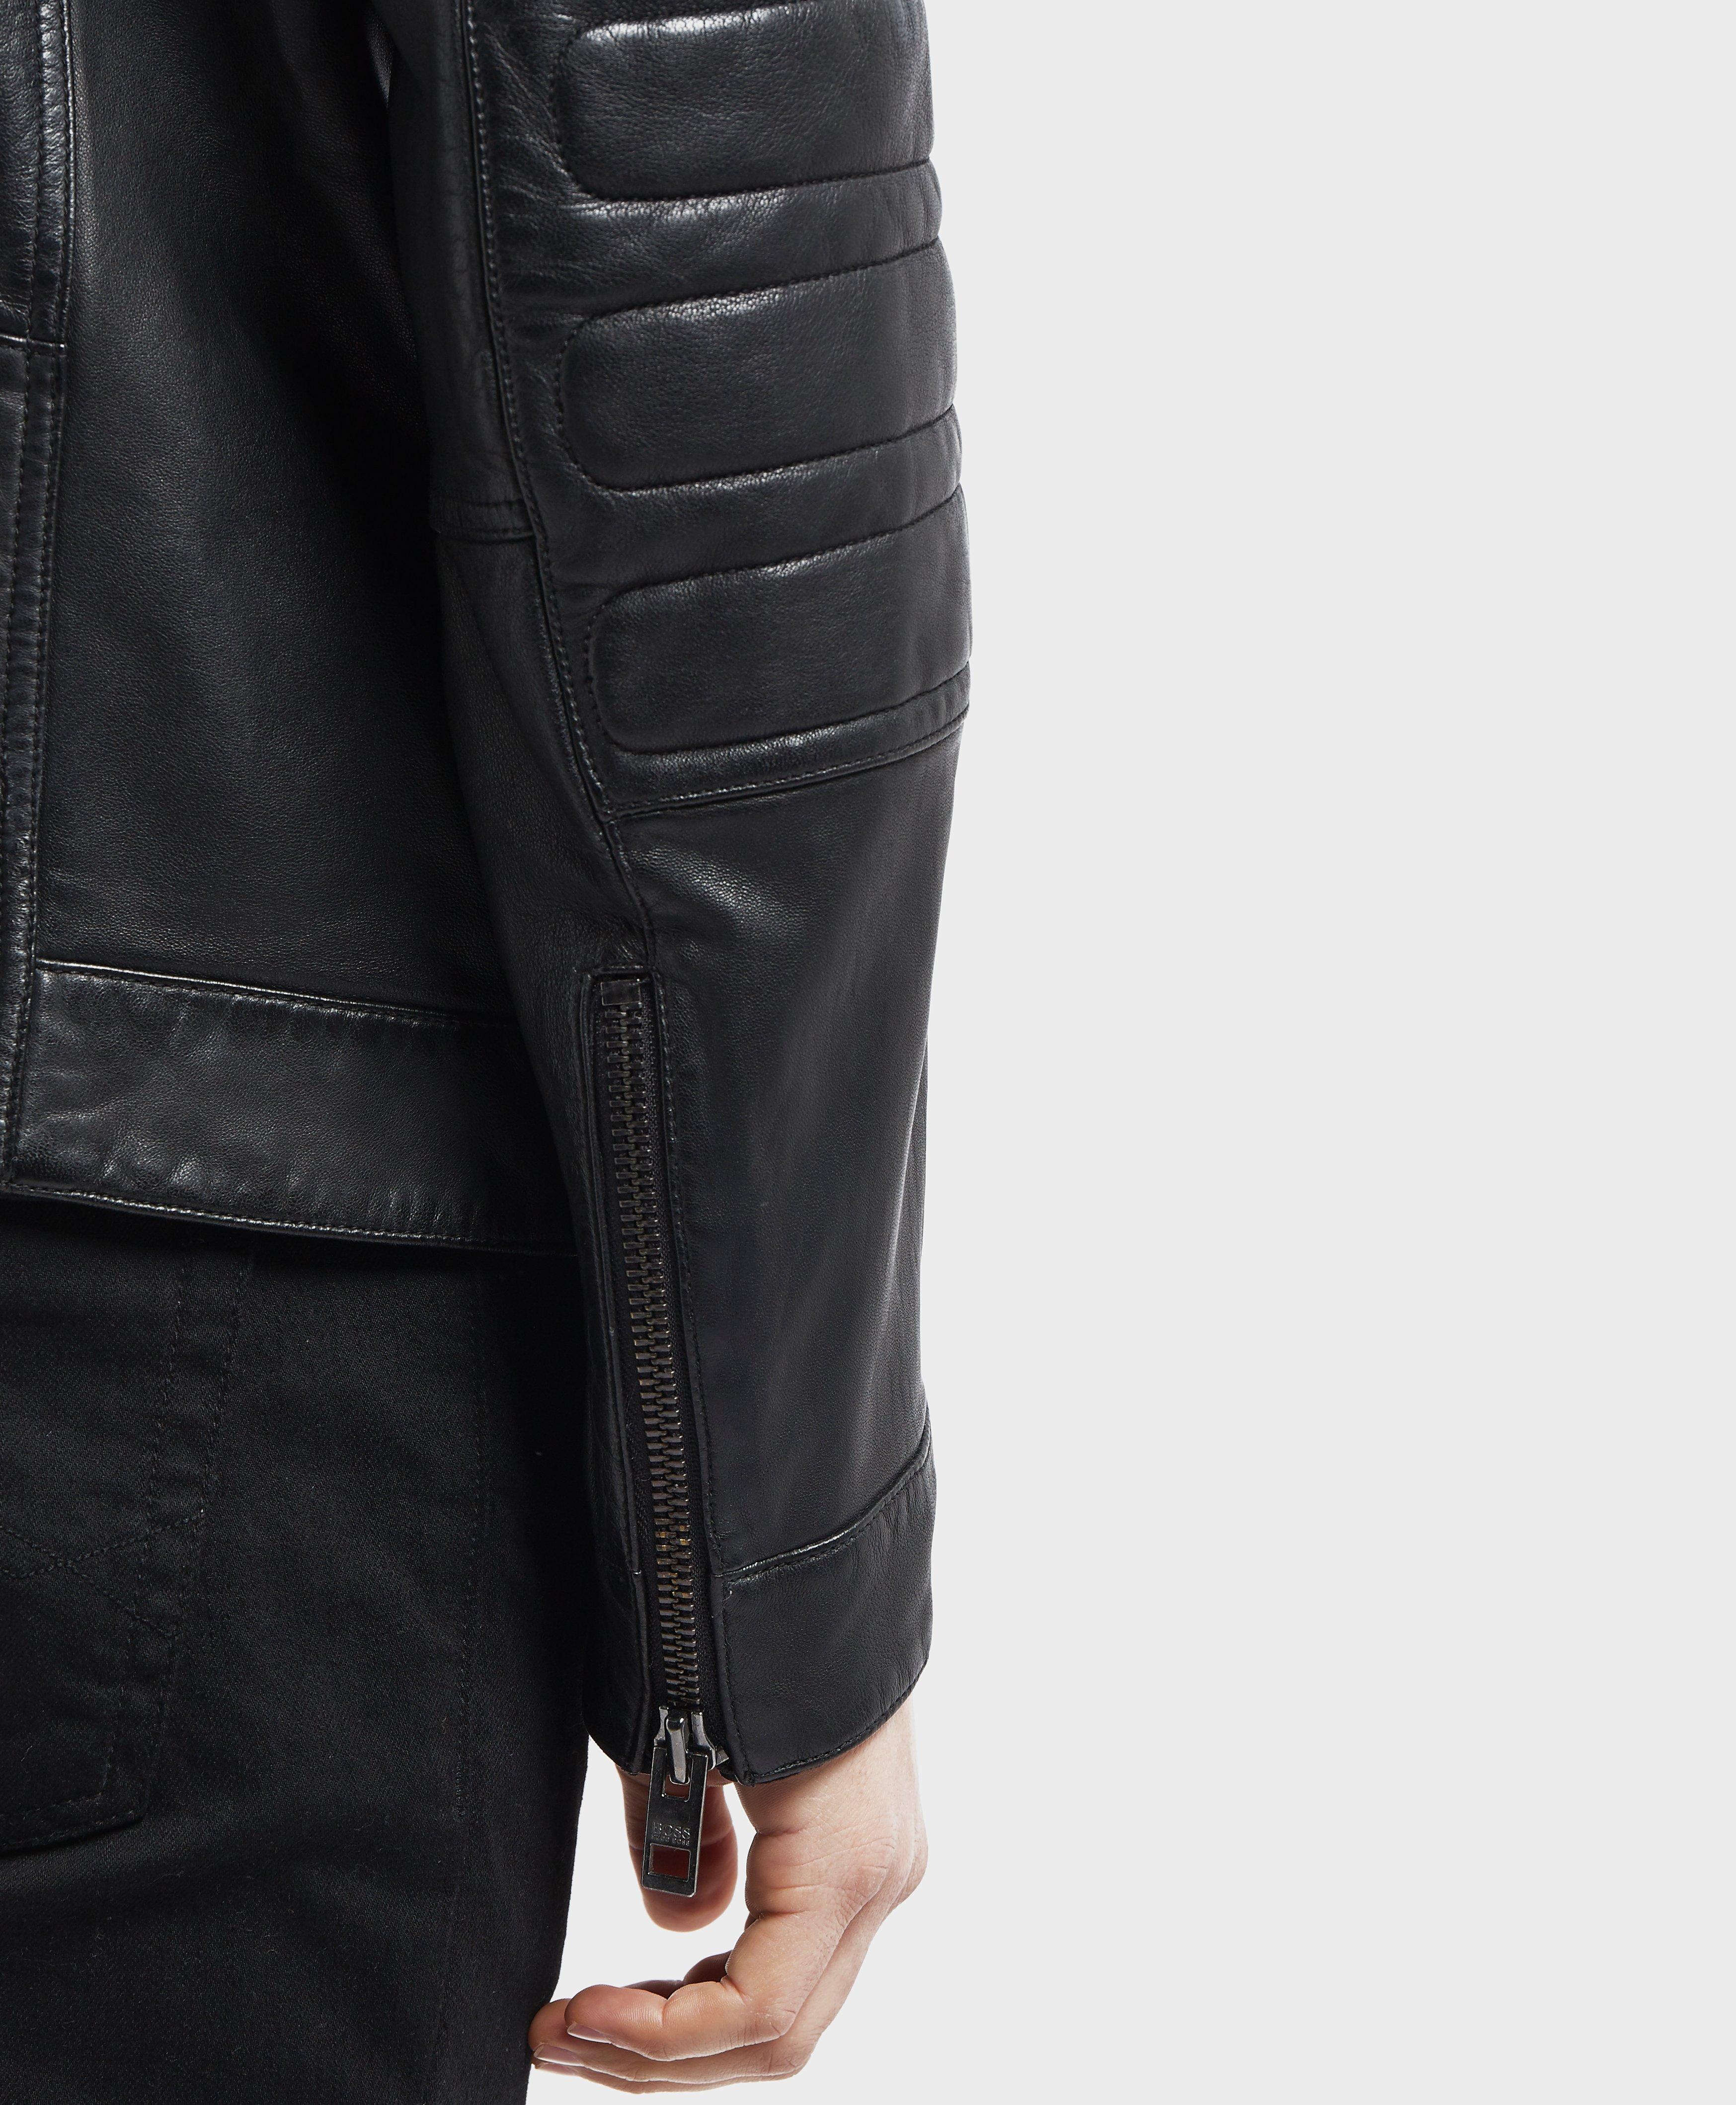 Hugo Boss Jagson Leather Jacket Shop, SAVE 59%.